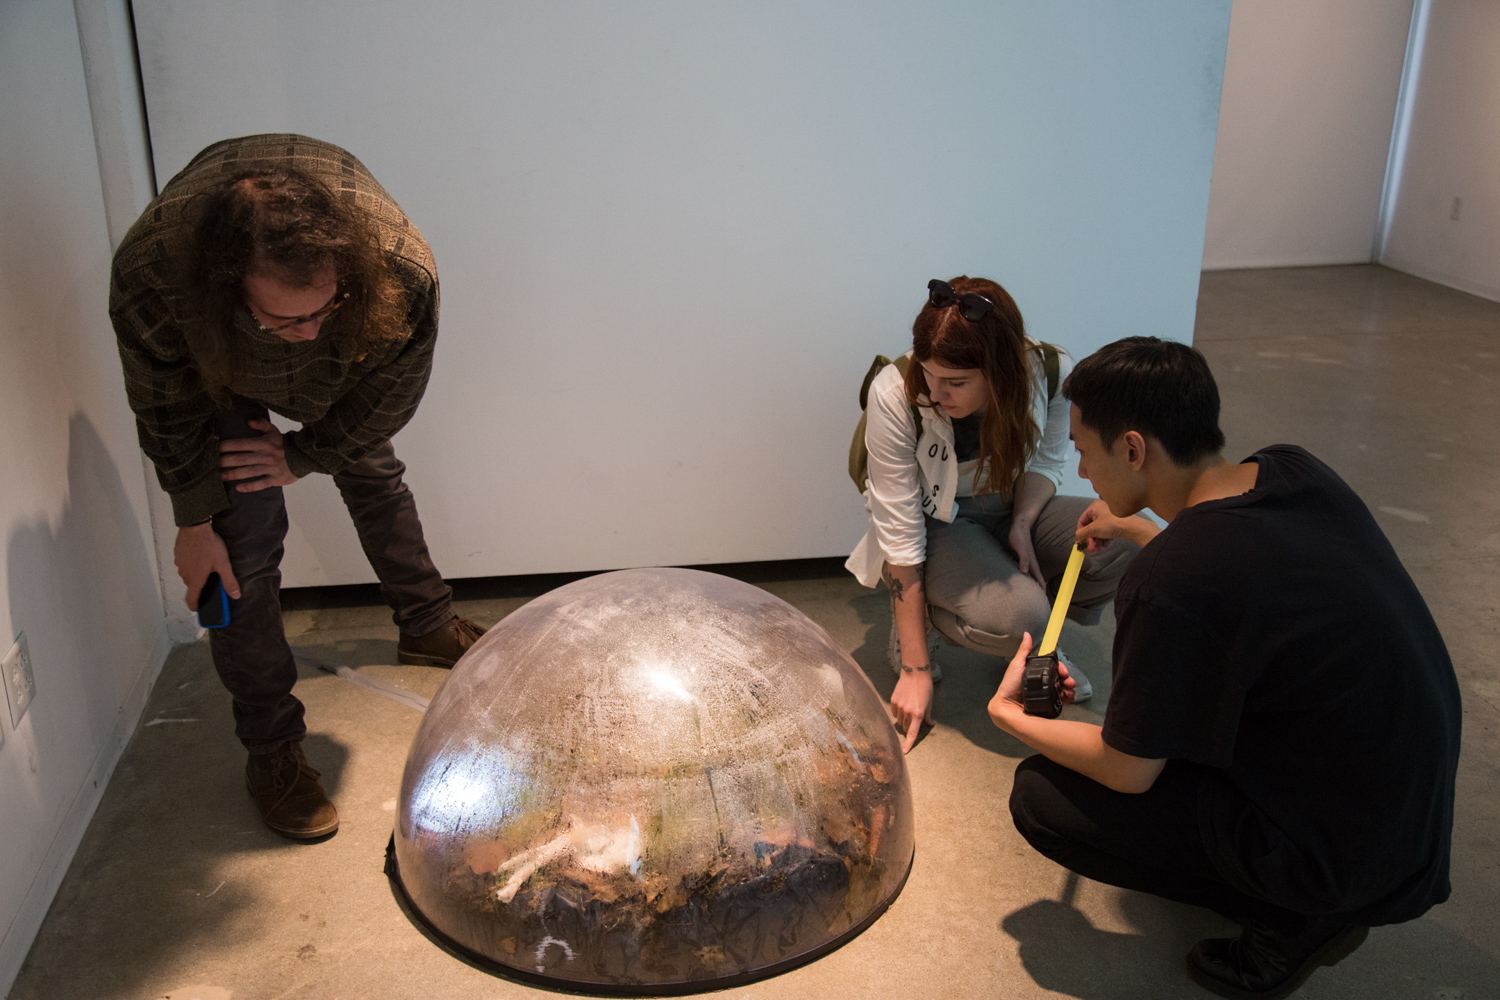 3 people inspecting Maru Garcia's sculpture work on the floor.